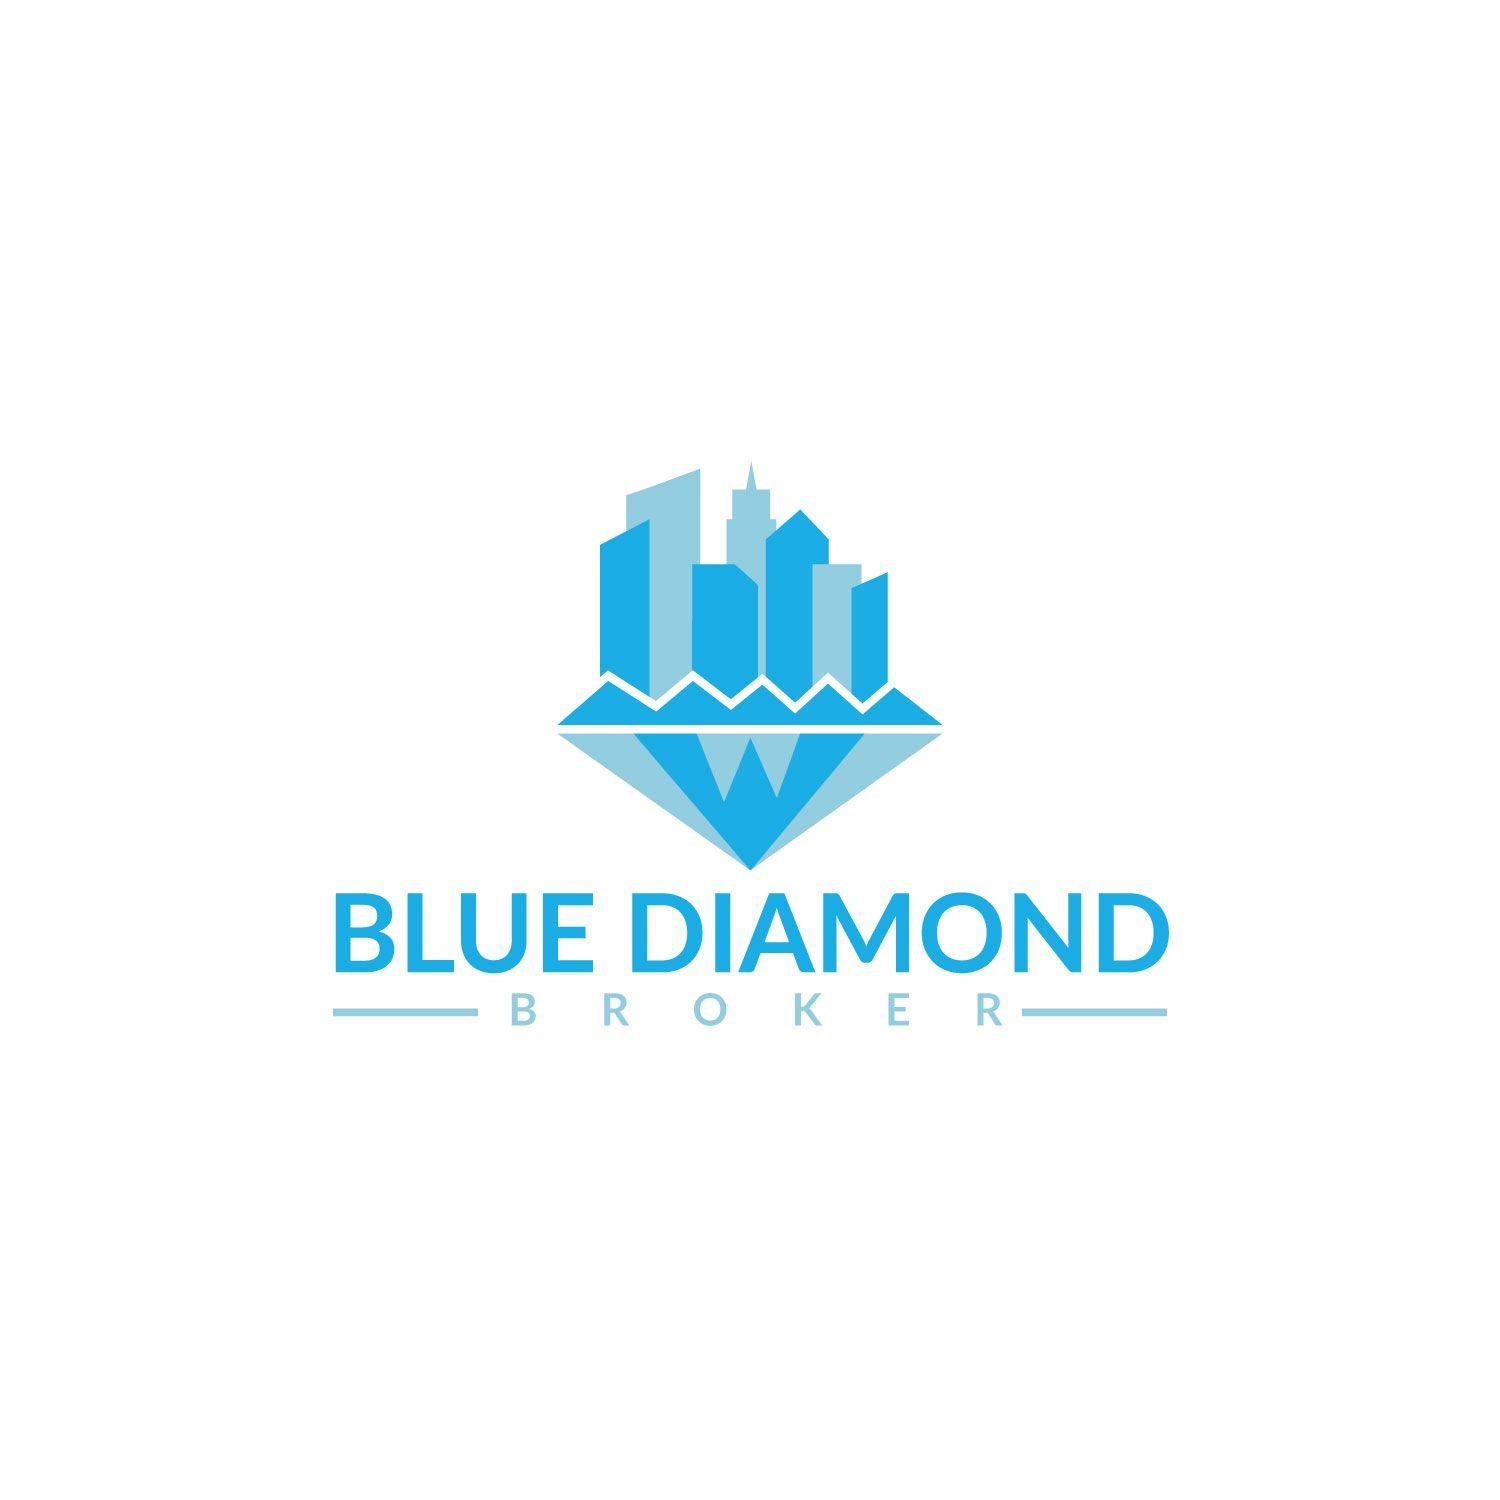 Blue Diamond Logo - Serious, Modern, Real Estate Logo Design for Blue Diamond Broker